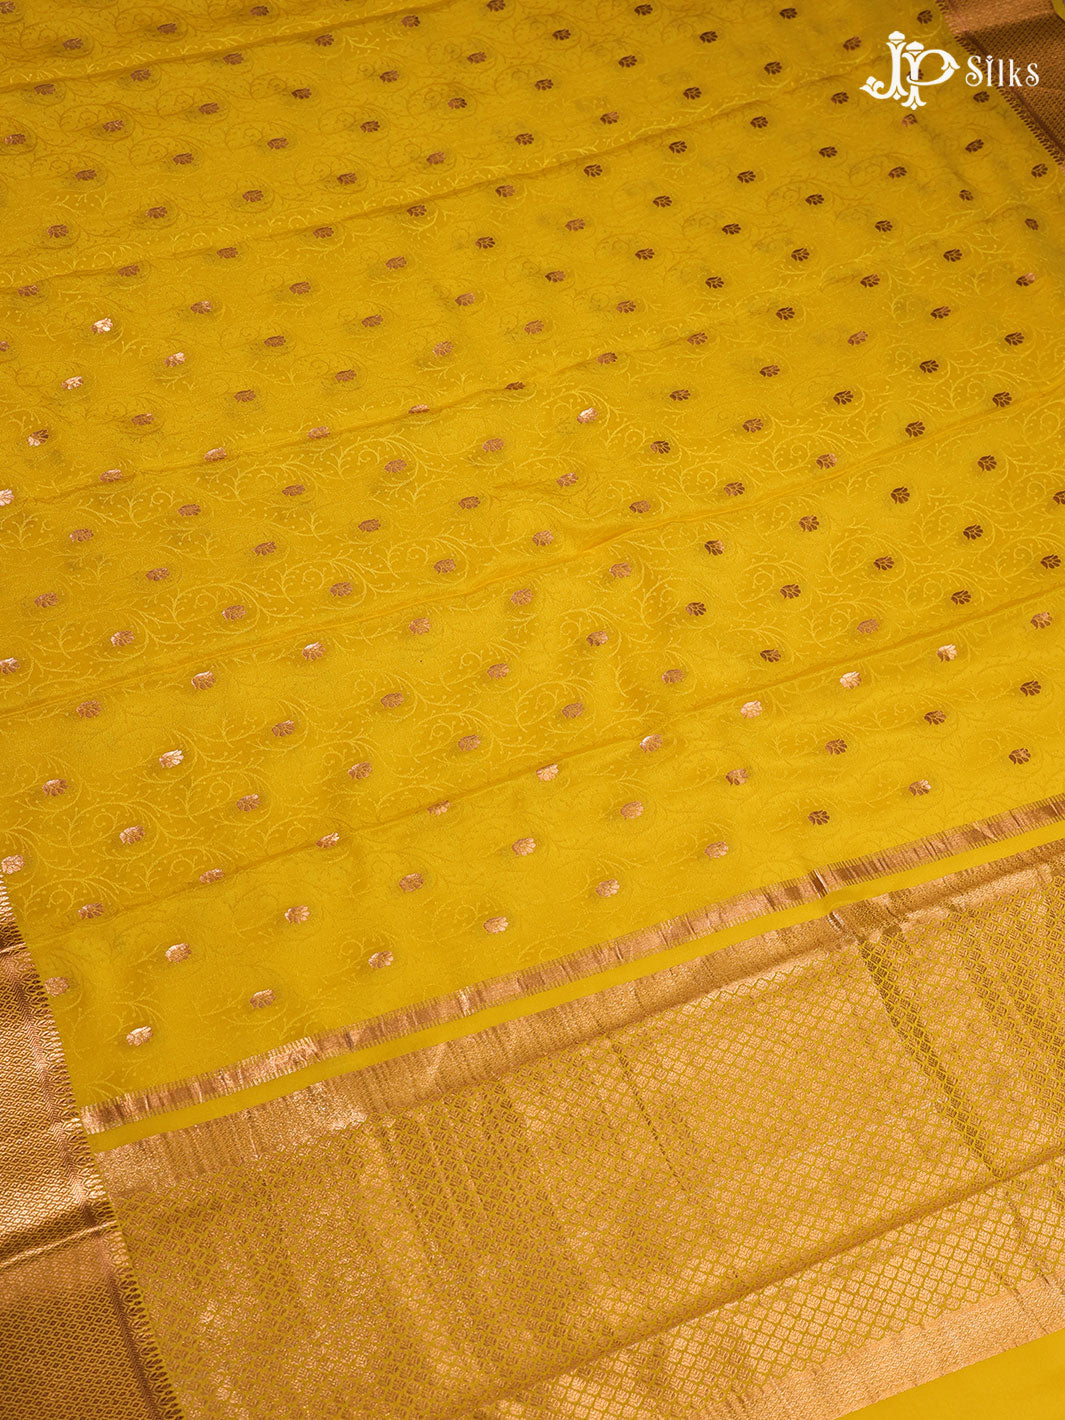 Lemon Yellow Mysore Silk Saree - D4807 - View 1